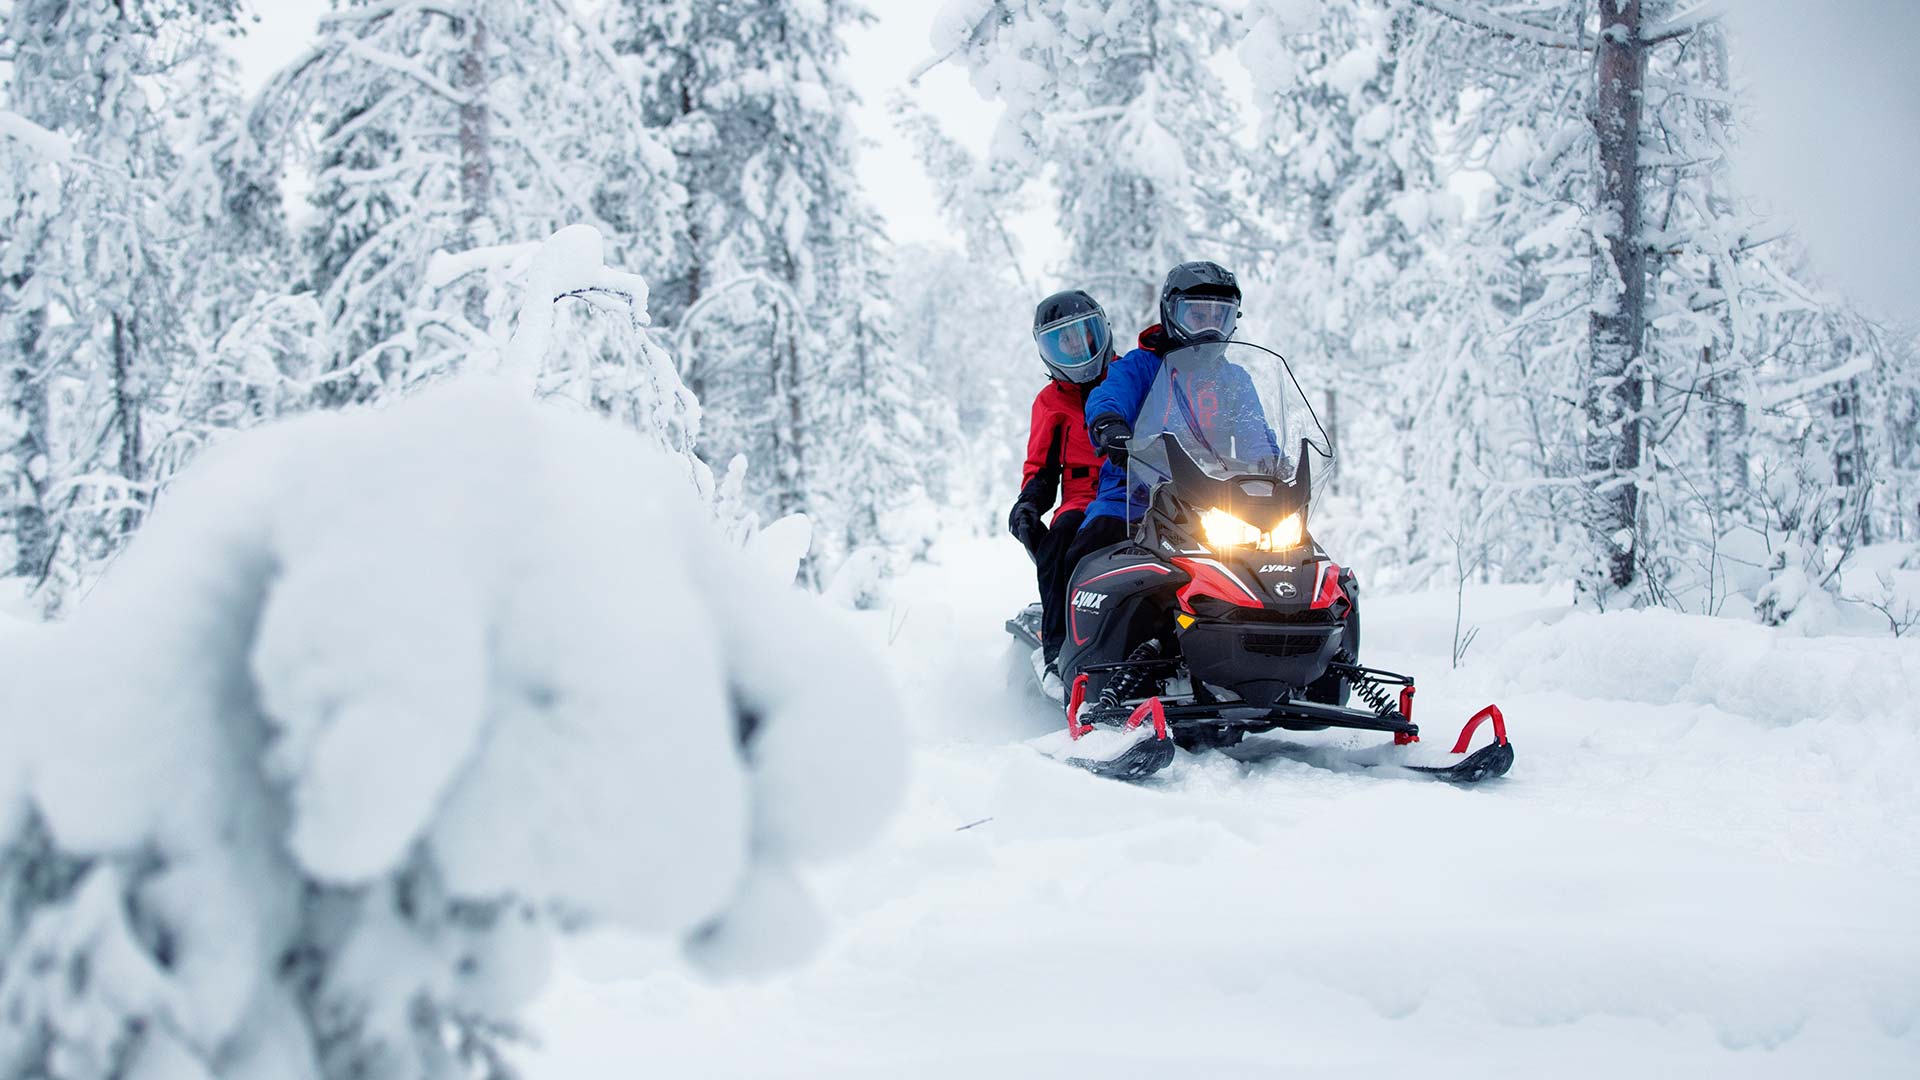 Lynx Adventure LX touring som körs på skoterled i snöig skog